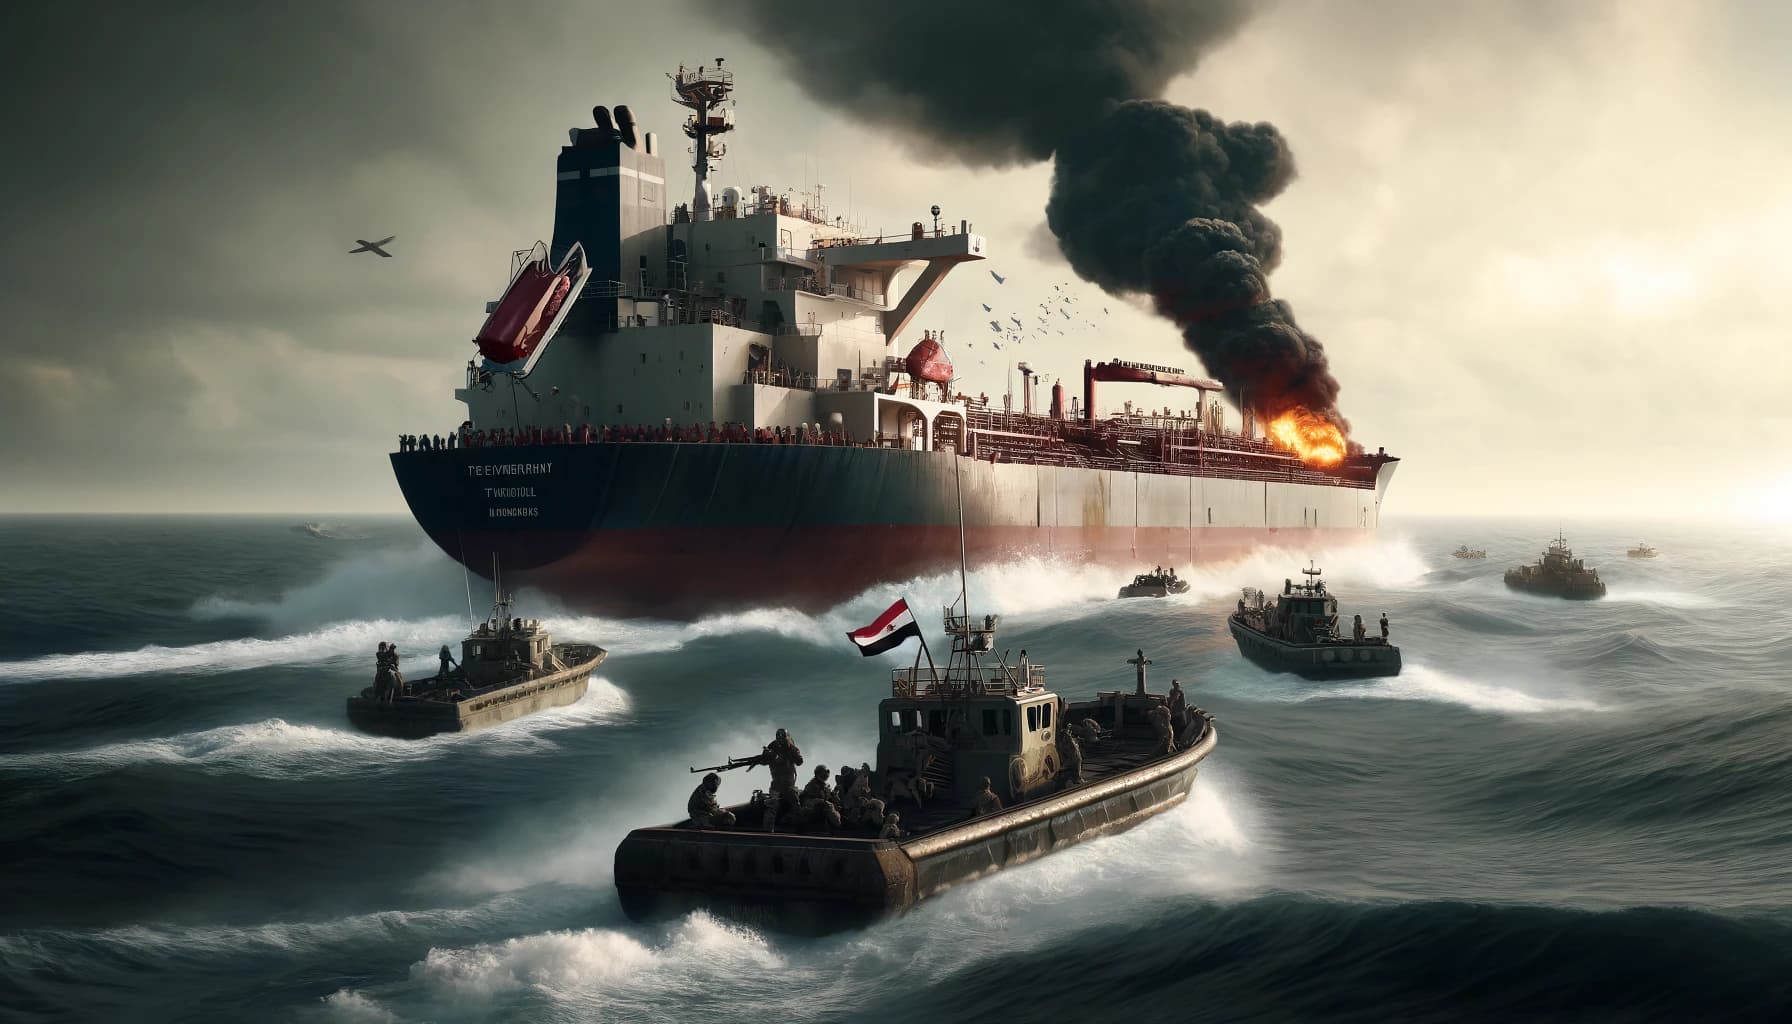 Oil Tanker Sustains Damage After Houthi Attack Off Yemen